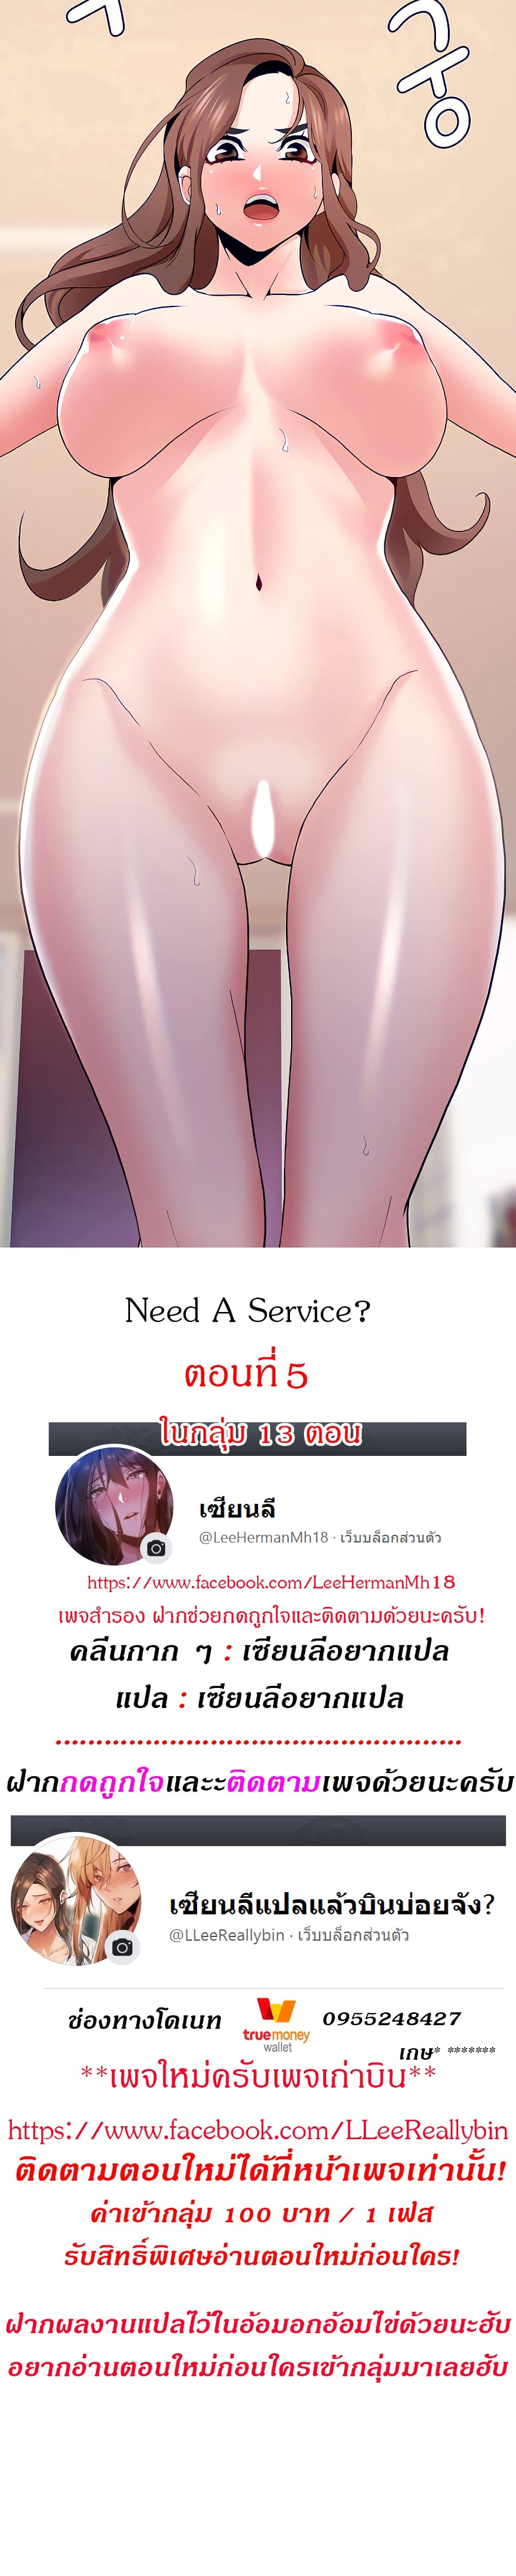 Need A Service? 5-5